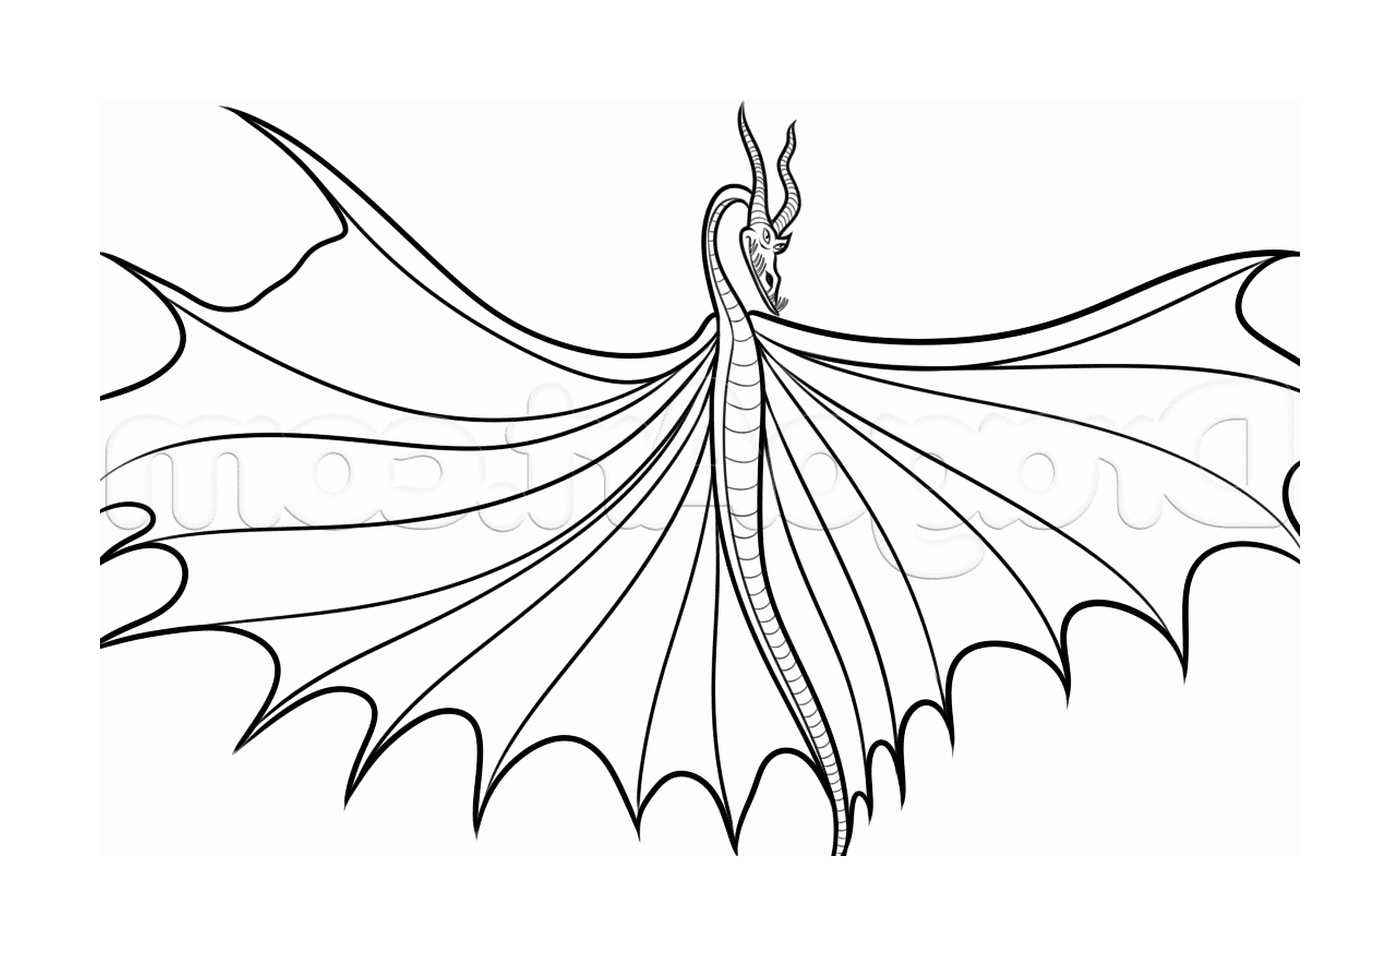  Timberjack, un dragón con alas desplegadas 